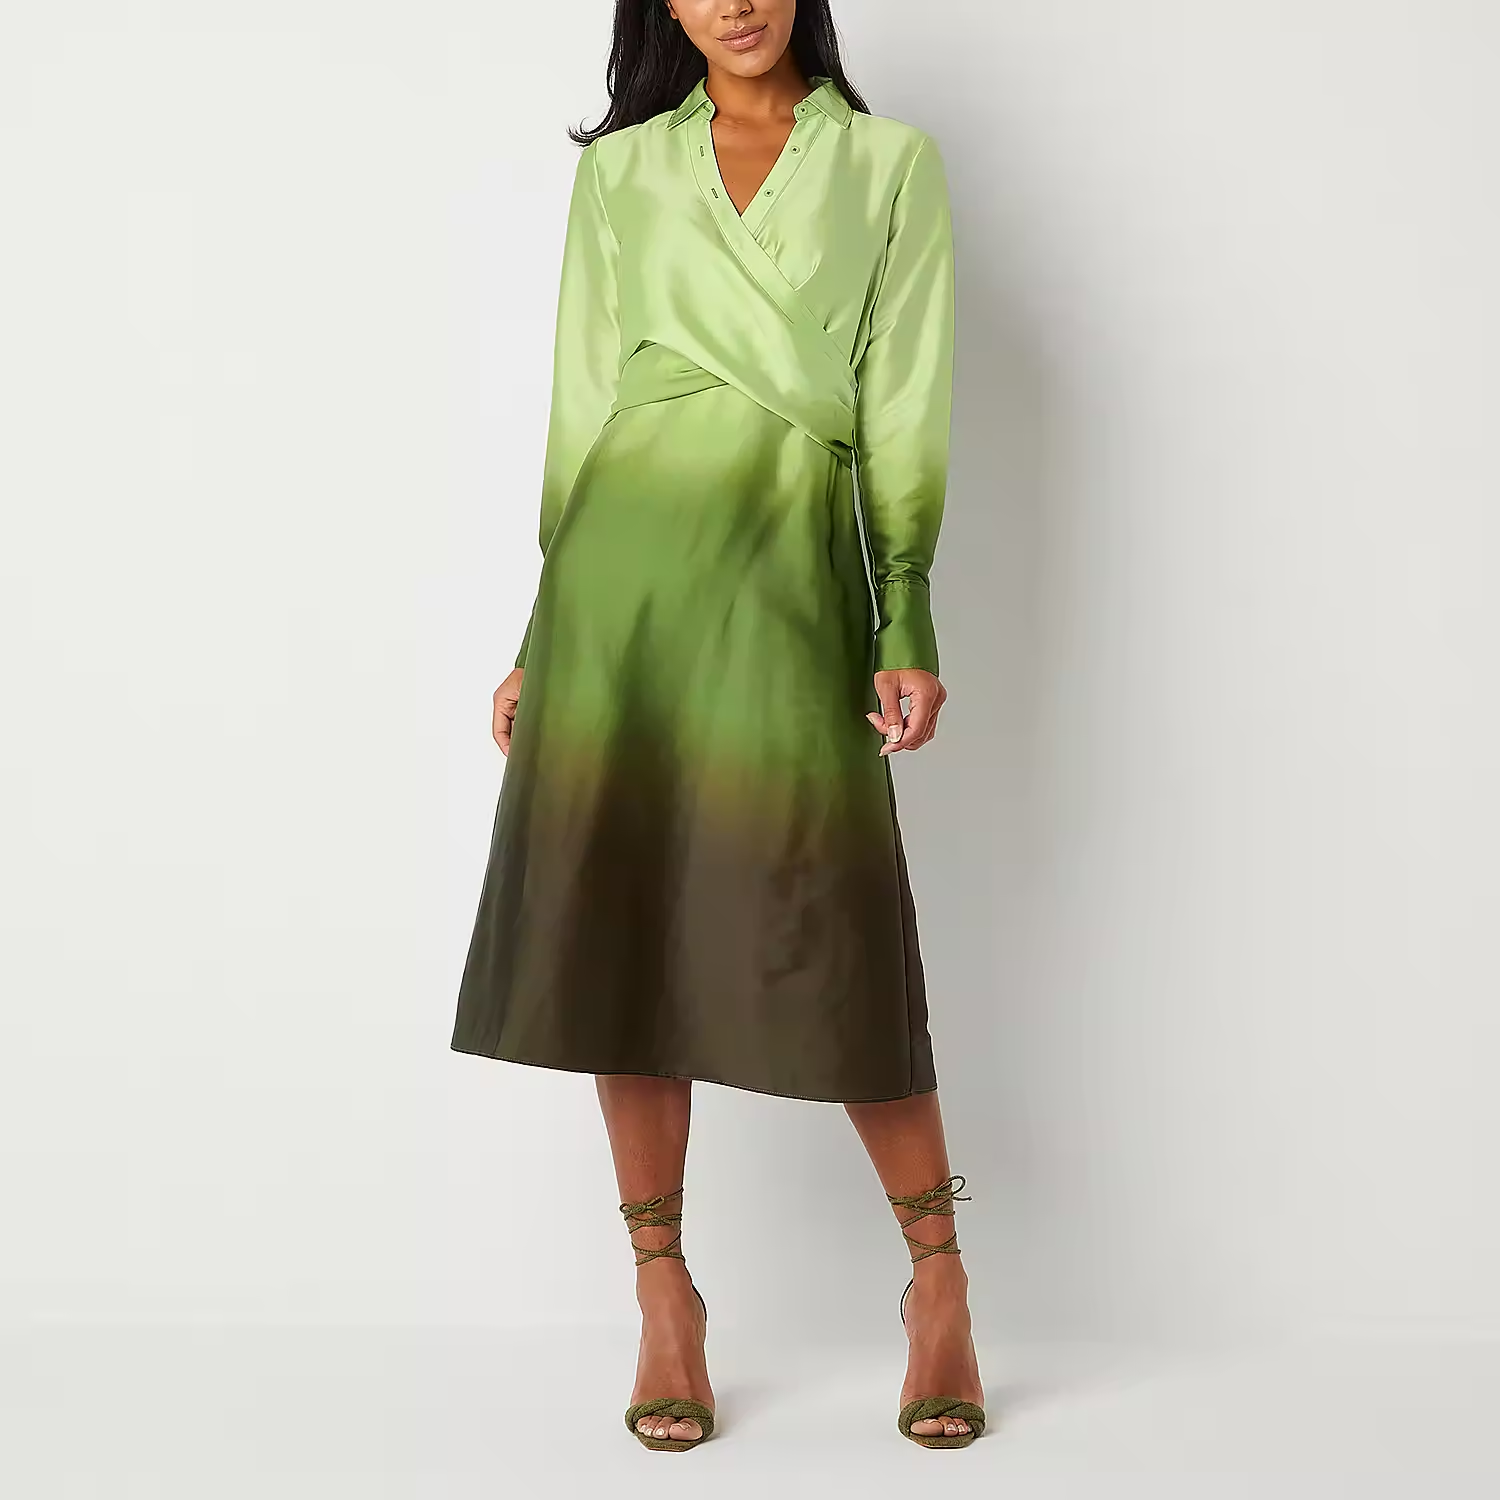 green ombre dress